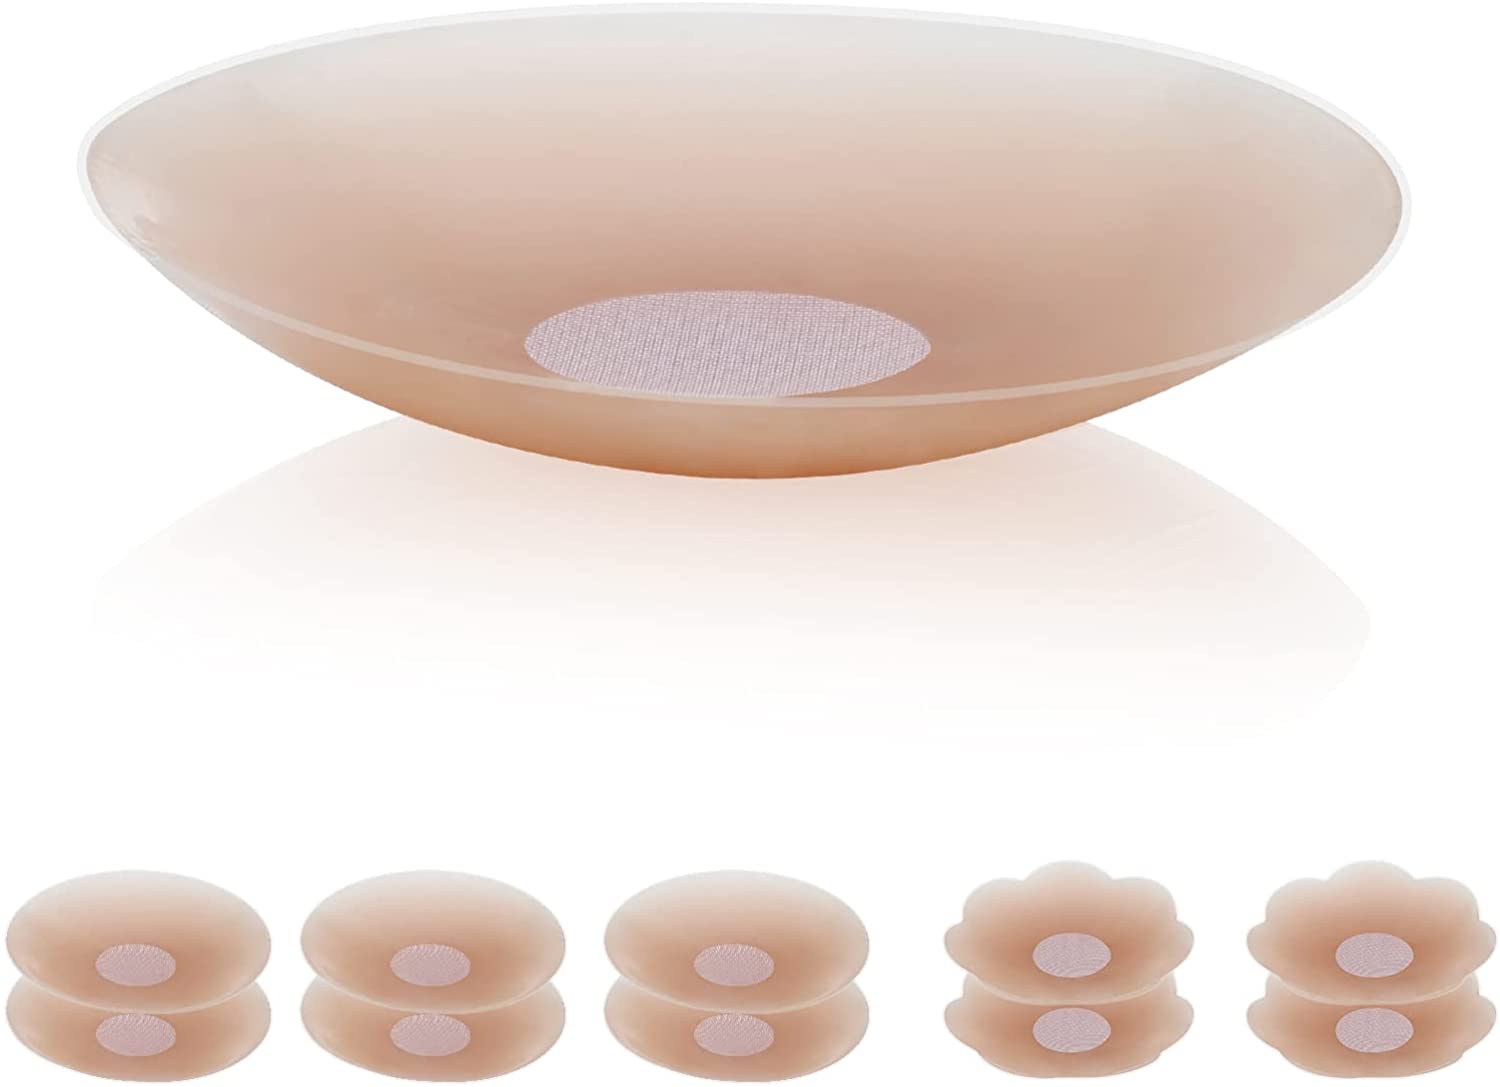 VOCH GALA Nipple Cover Ultra Thin, 2 Pairs, Silicone Nipple